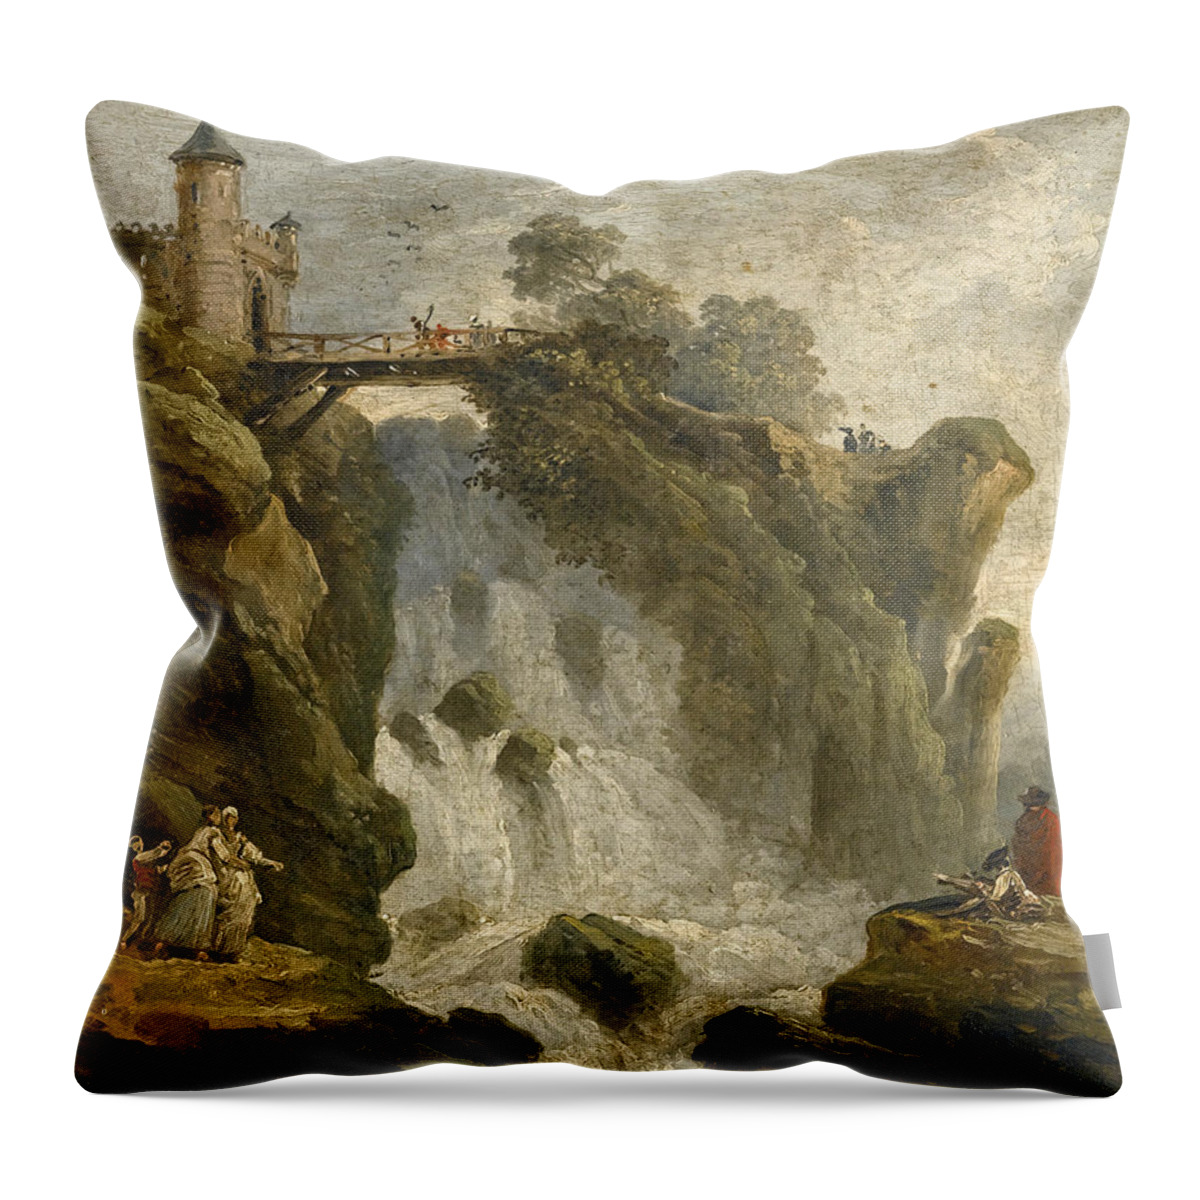 Hubert Robert Throw Pillow featuring the painting An Artist sketching with other Figures beneath a Waterfall by Hubert Robert